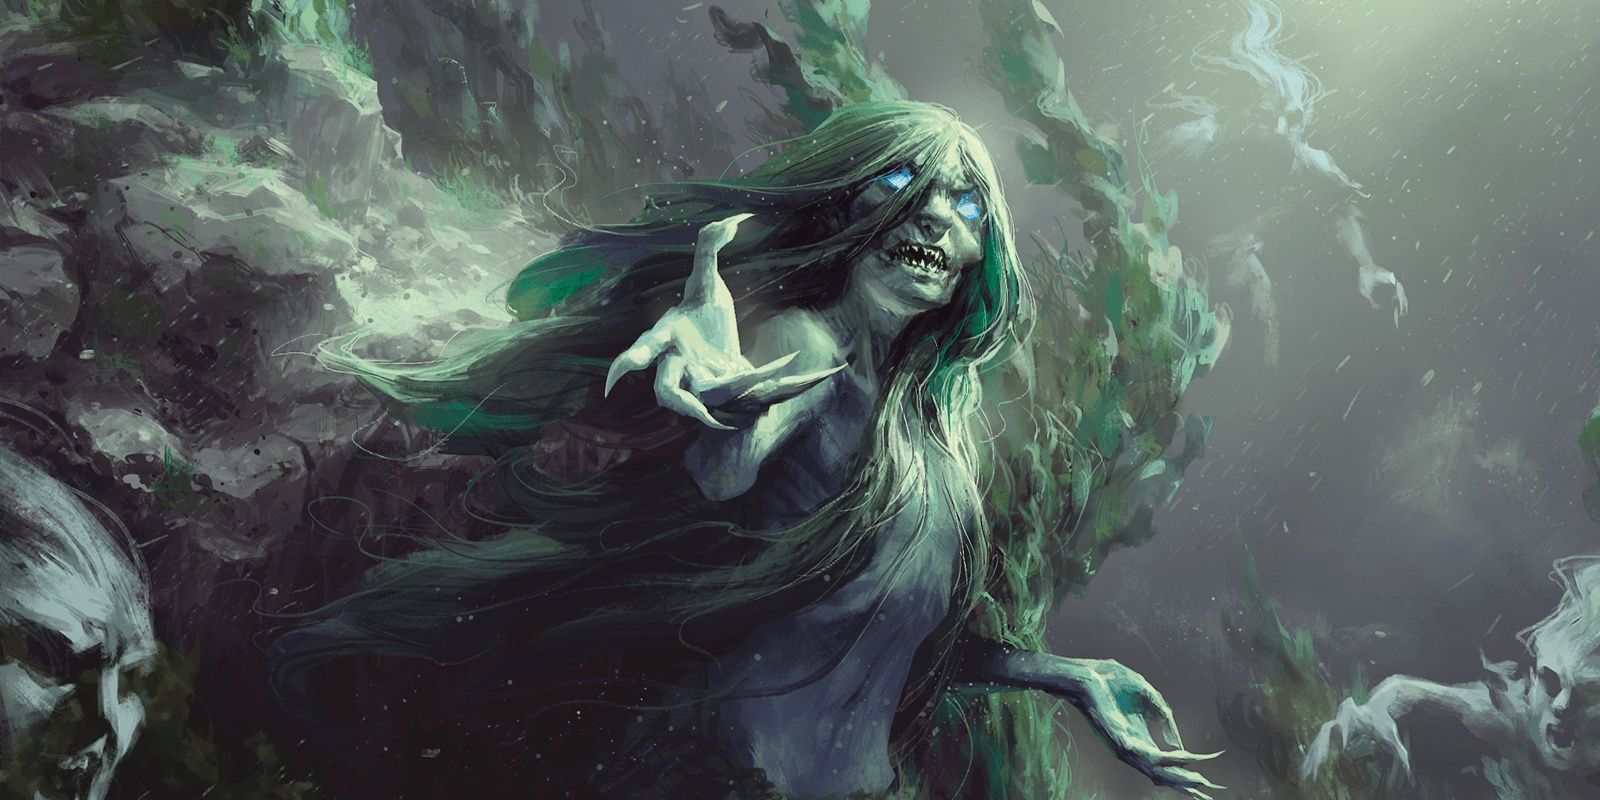 A sea hag reaching toward the player in DnD.